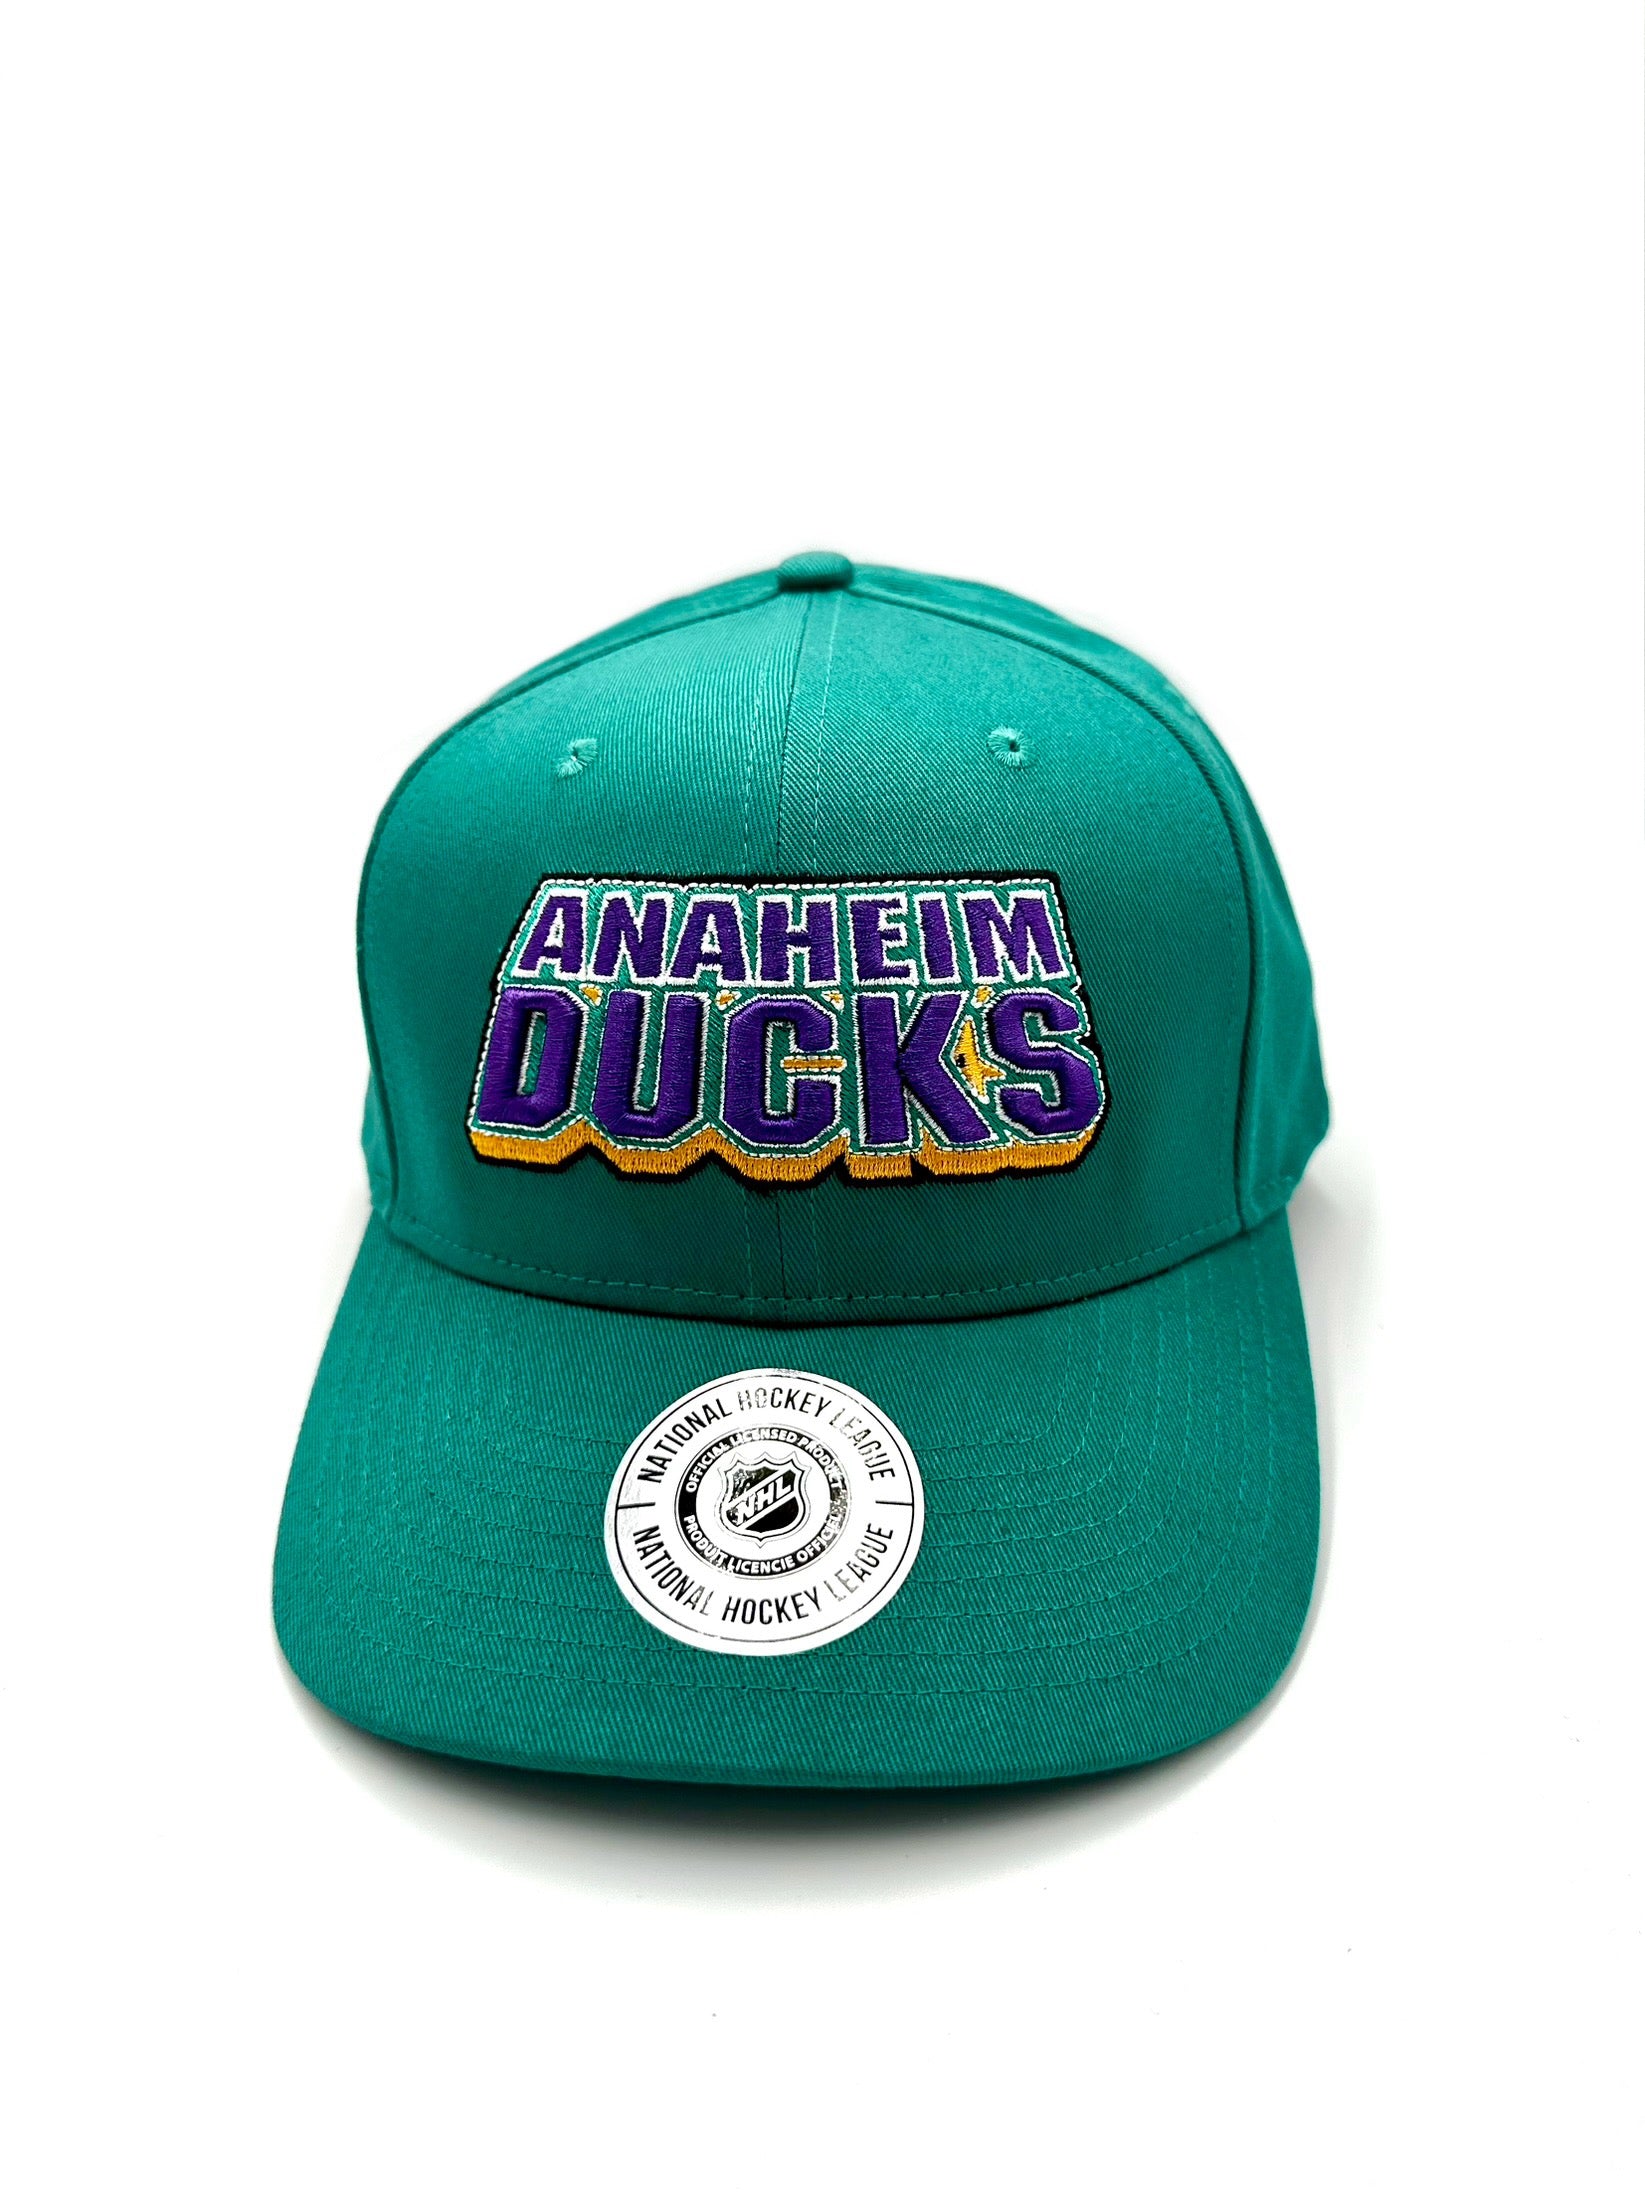 Anaheim Ducks Hat - Teal Pro Crown NHL Snapback Cap - Majestic Athletic